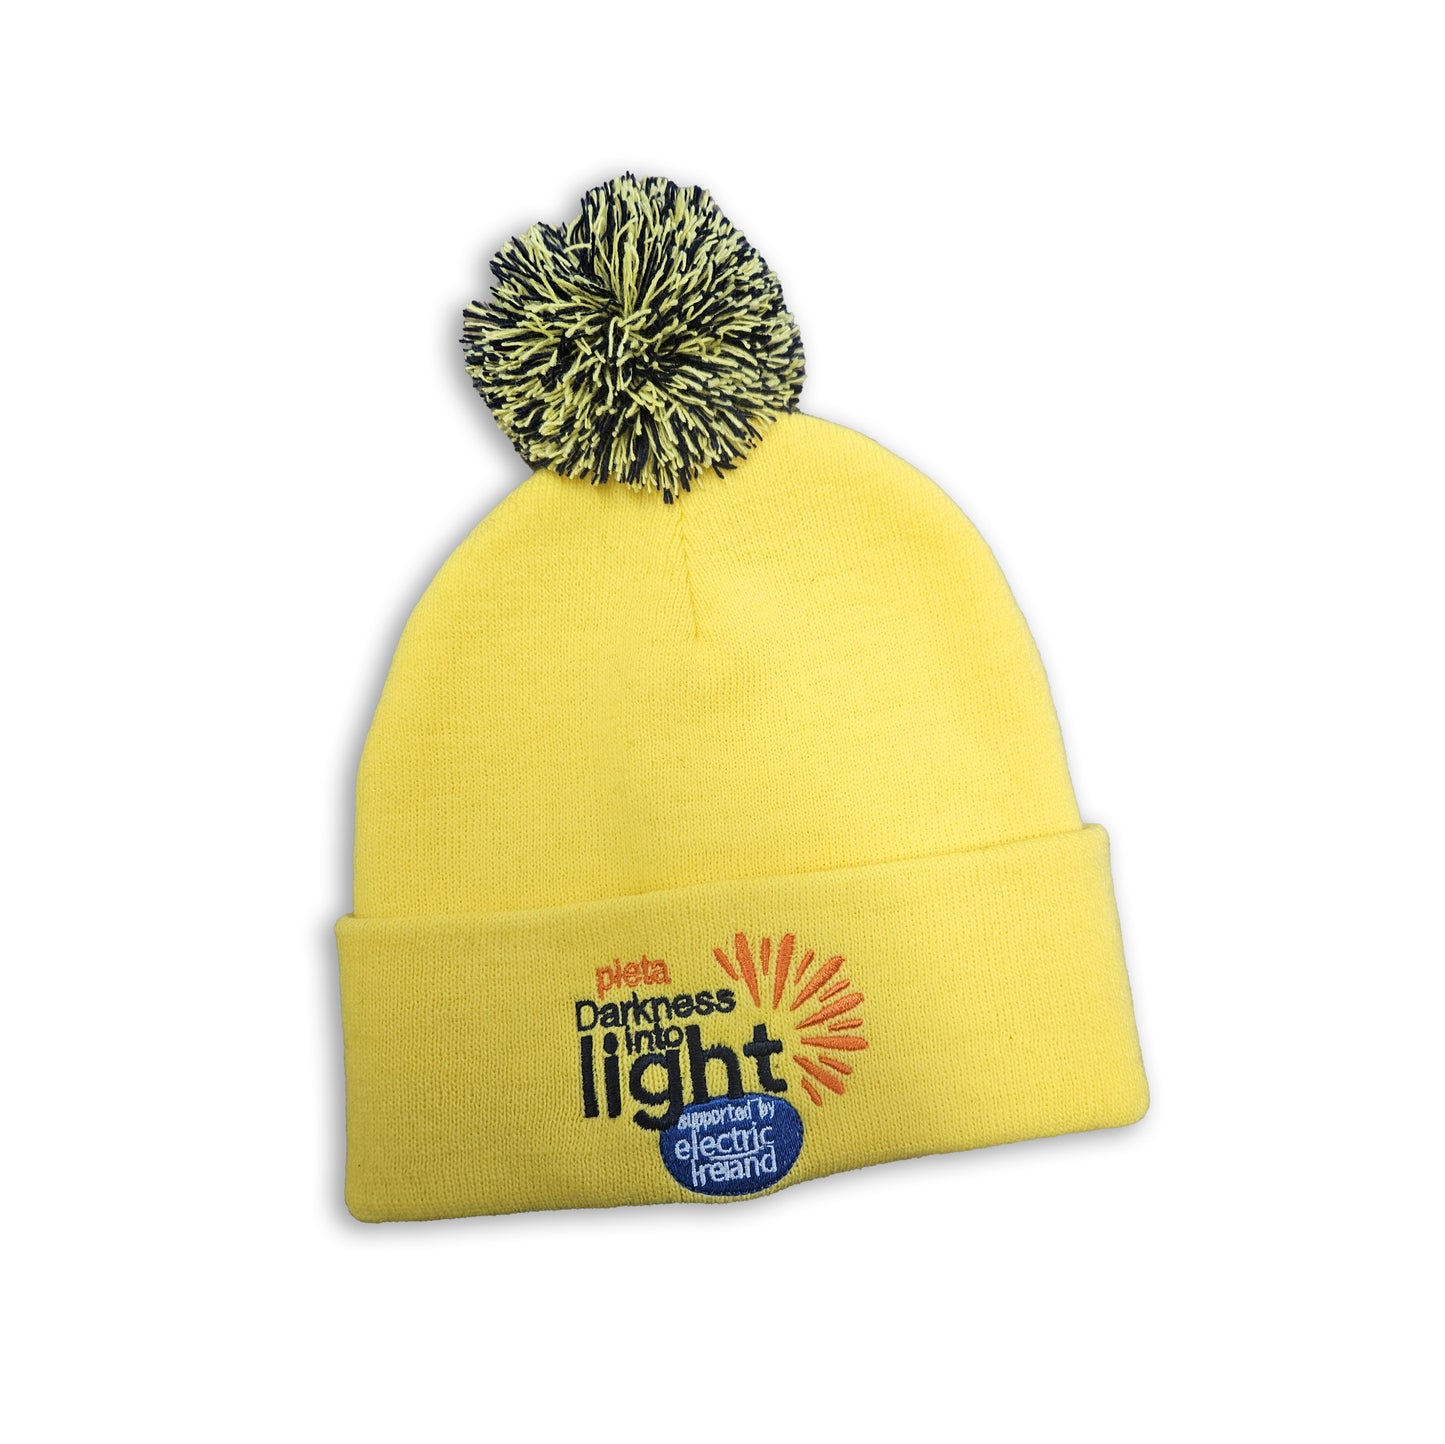 DIL Premium Bobble Hat - Yellow